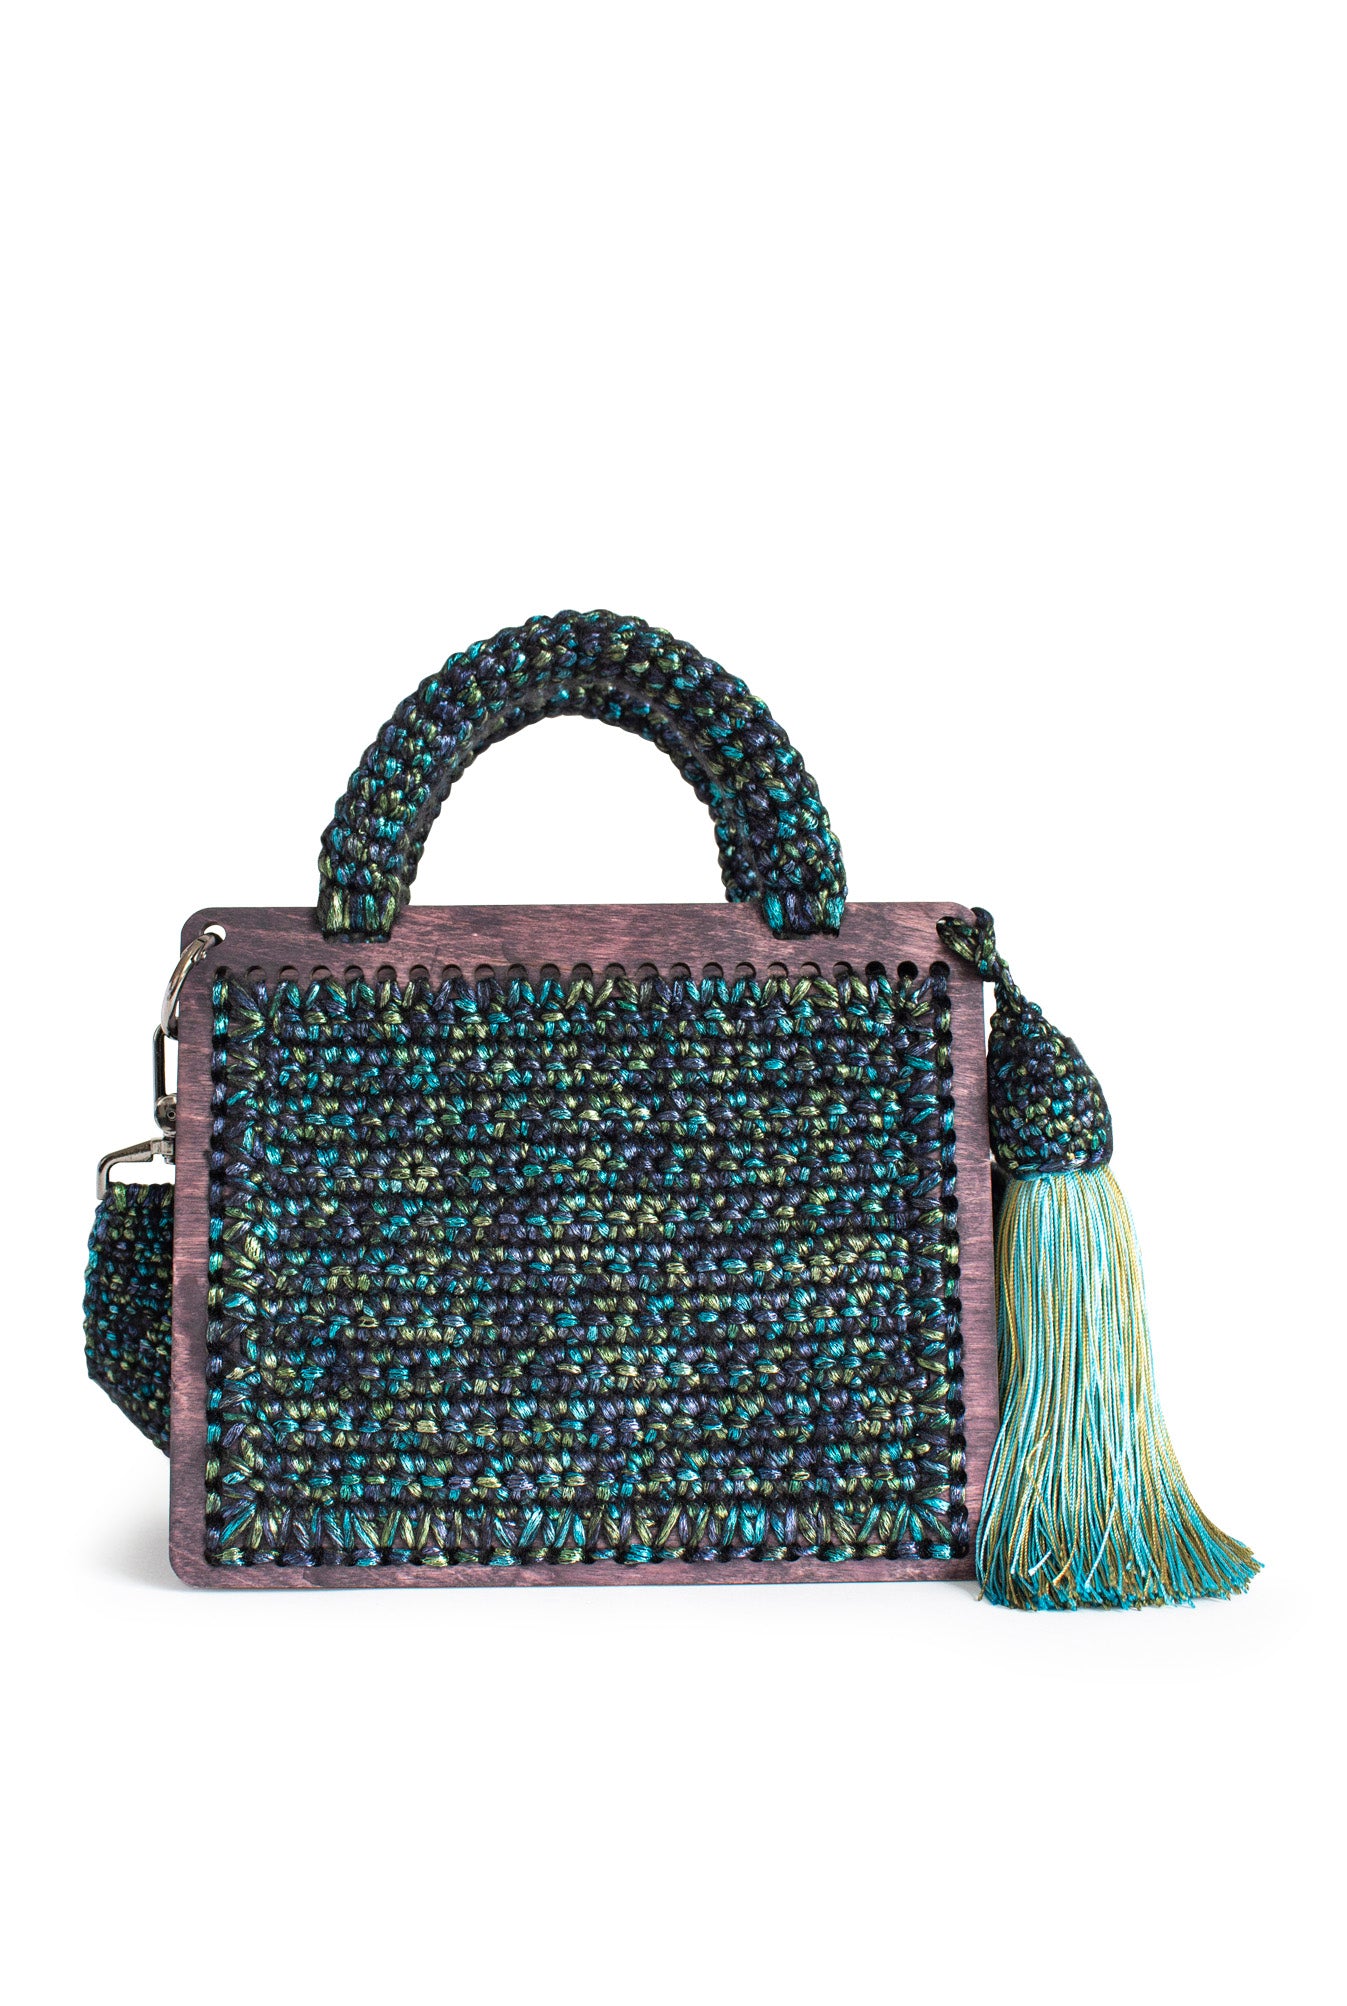 How the heck do you put twillys on bag handles? : r/handbags